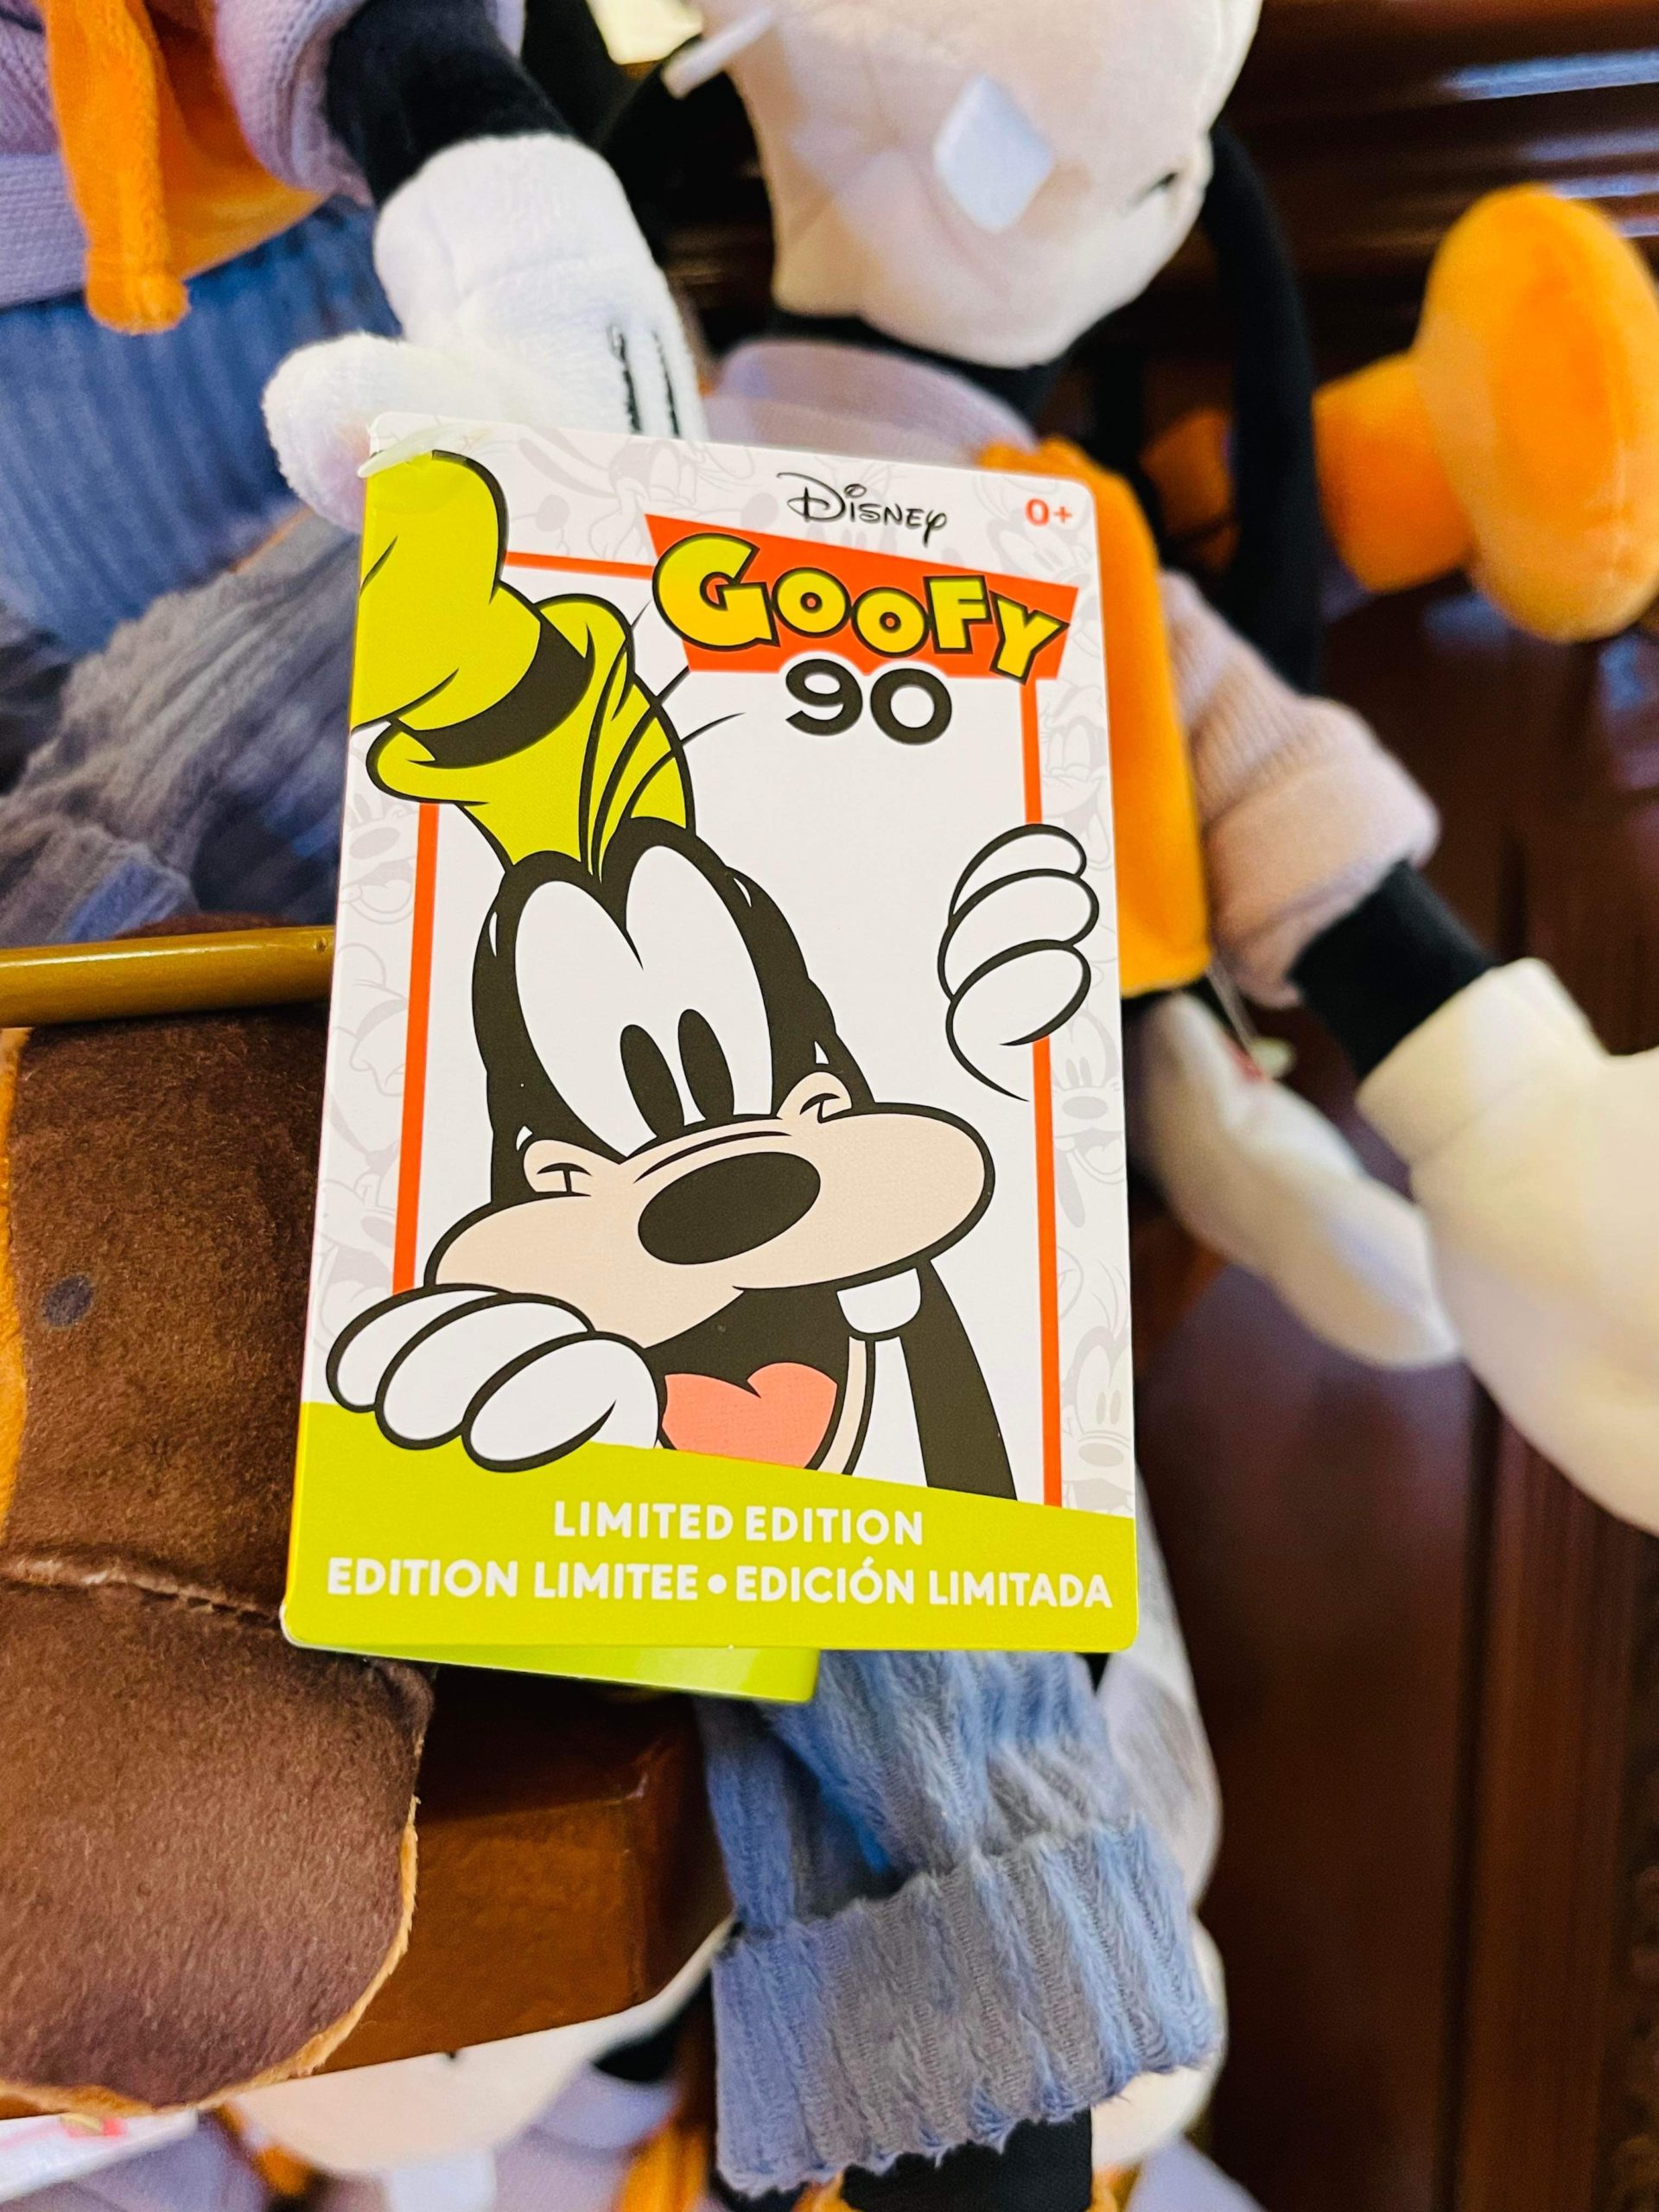 Restock Alert! Goofy 90th Anniversary Plush Spotted Today! - MickeyBlog.com